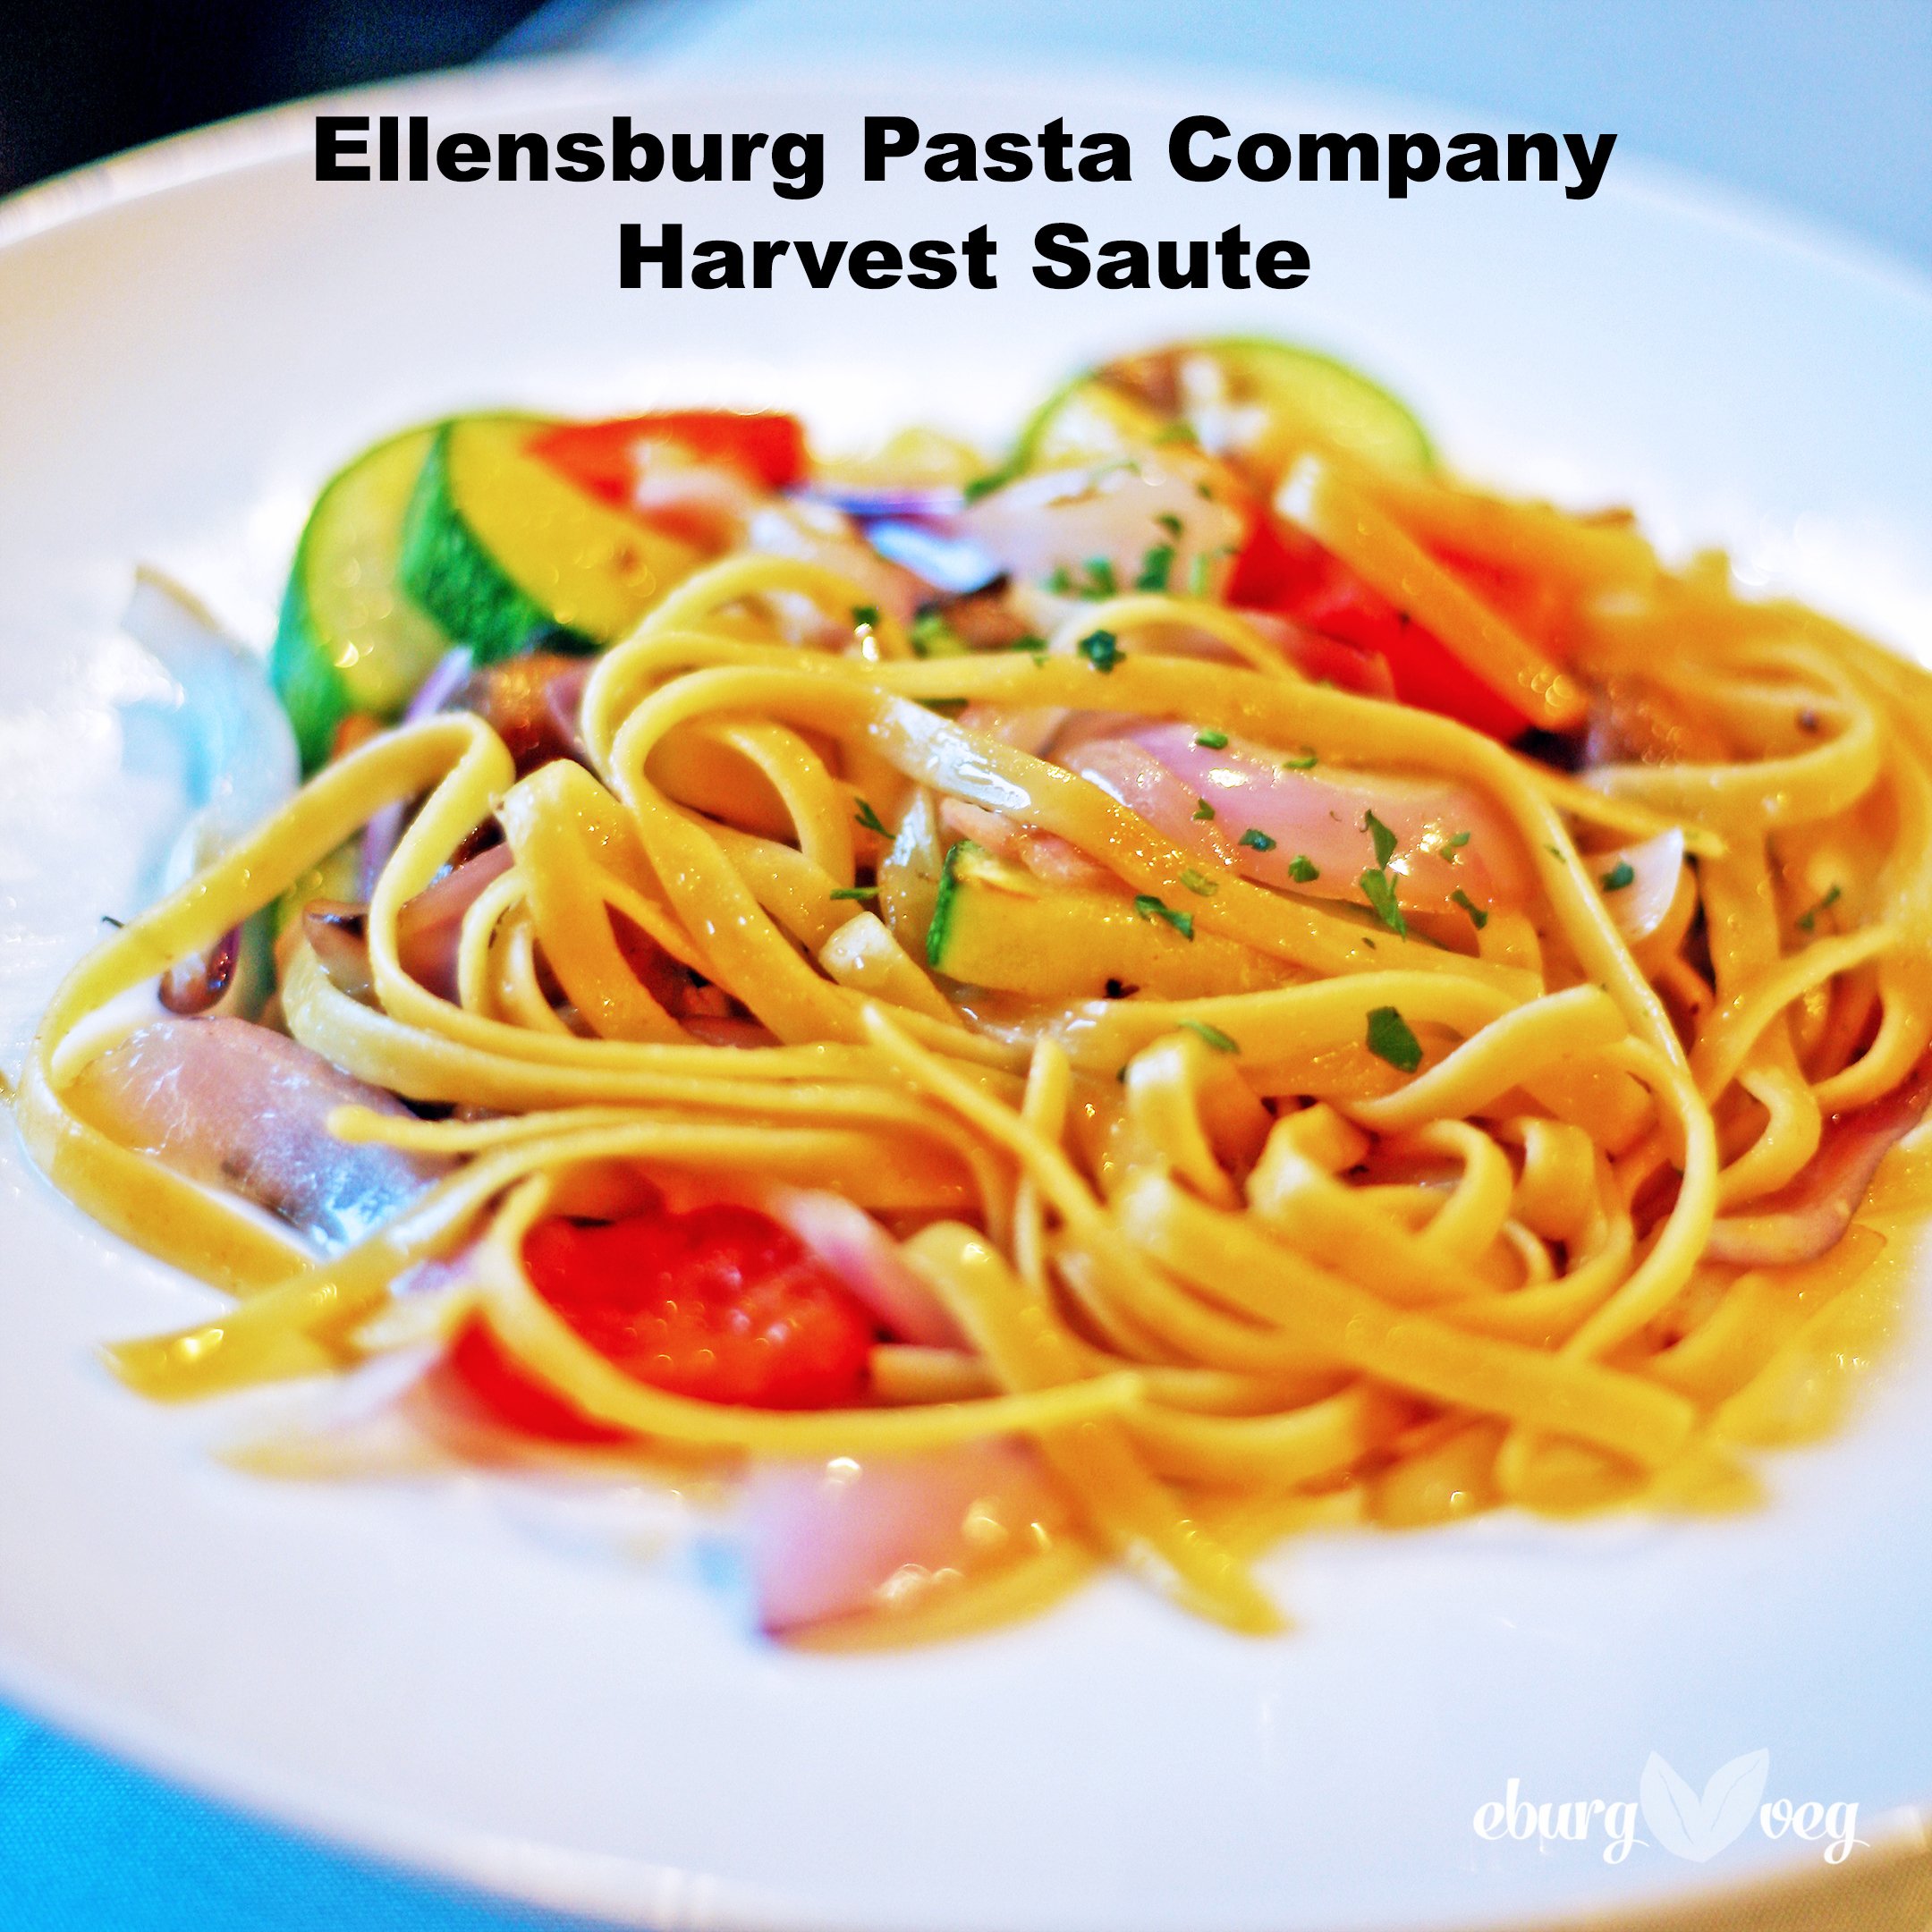 Ellensburg Pasta Co Harvest Saute.jpg